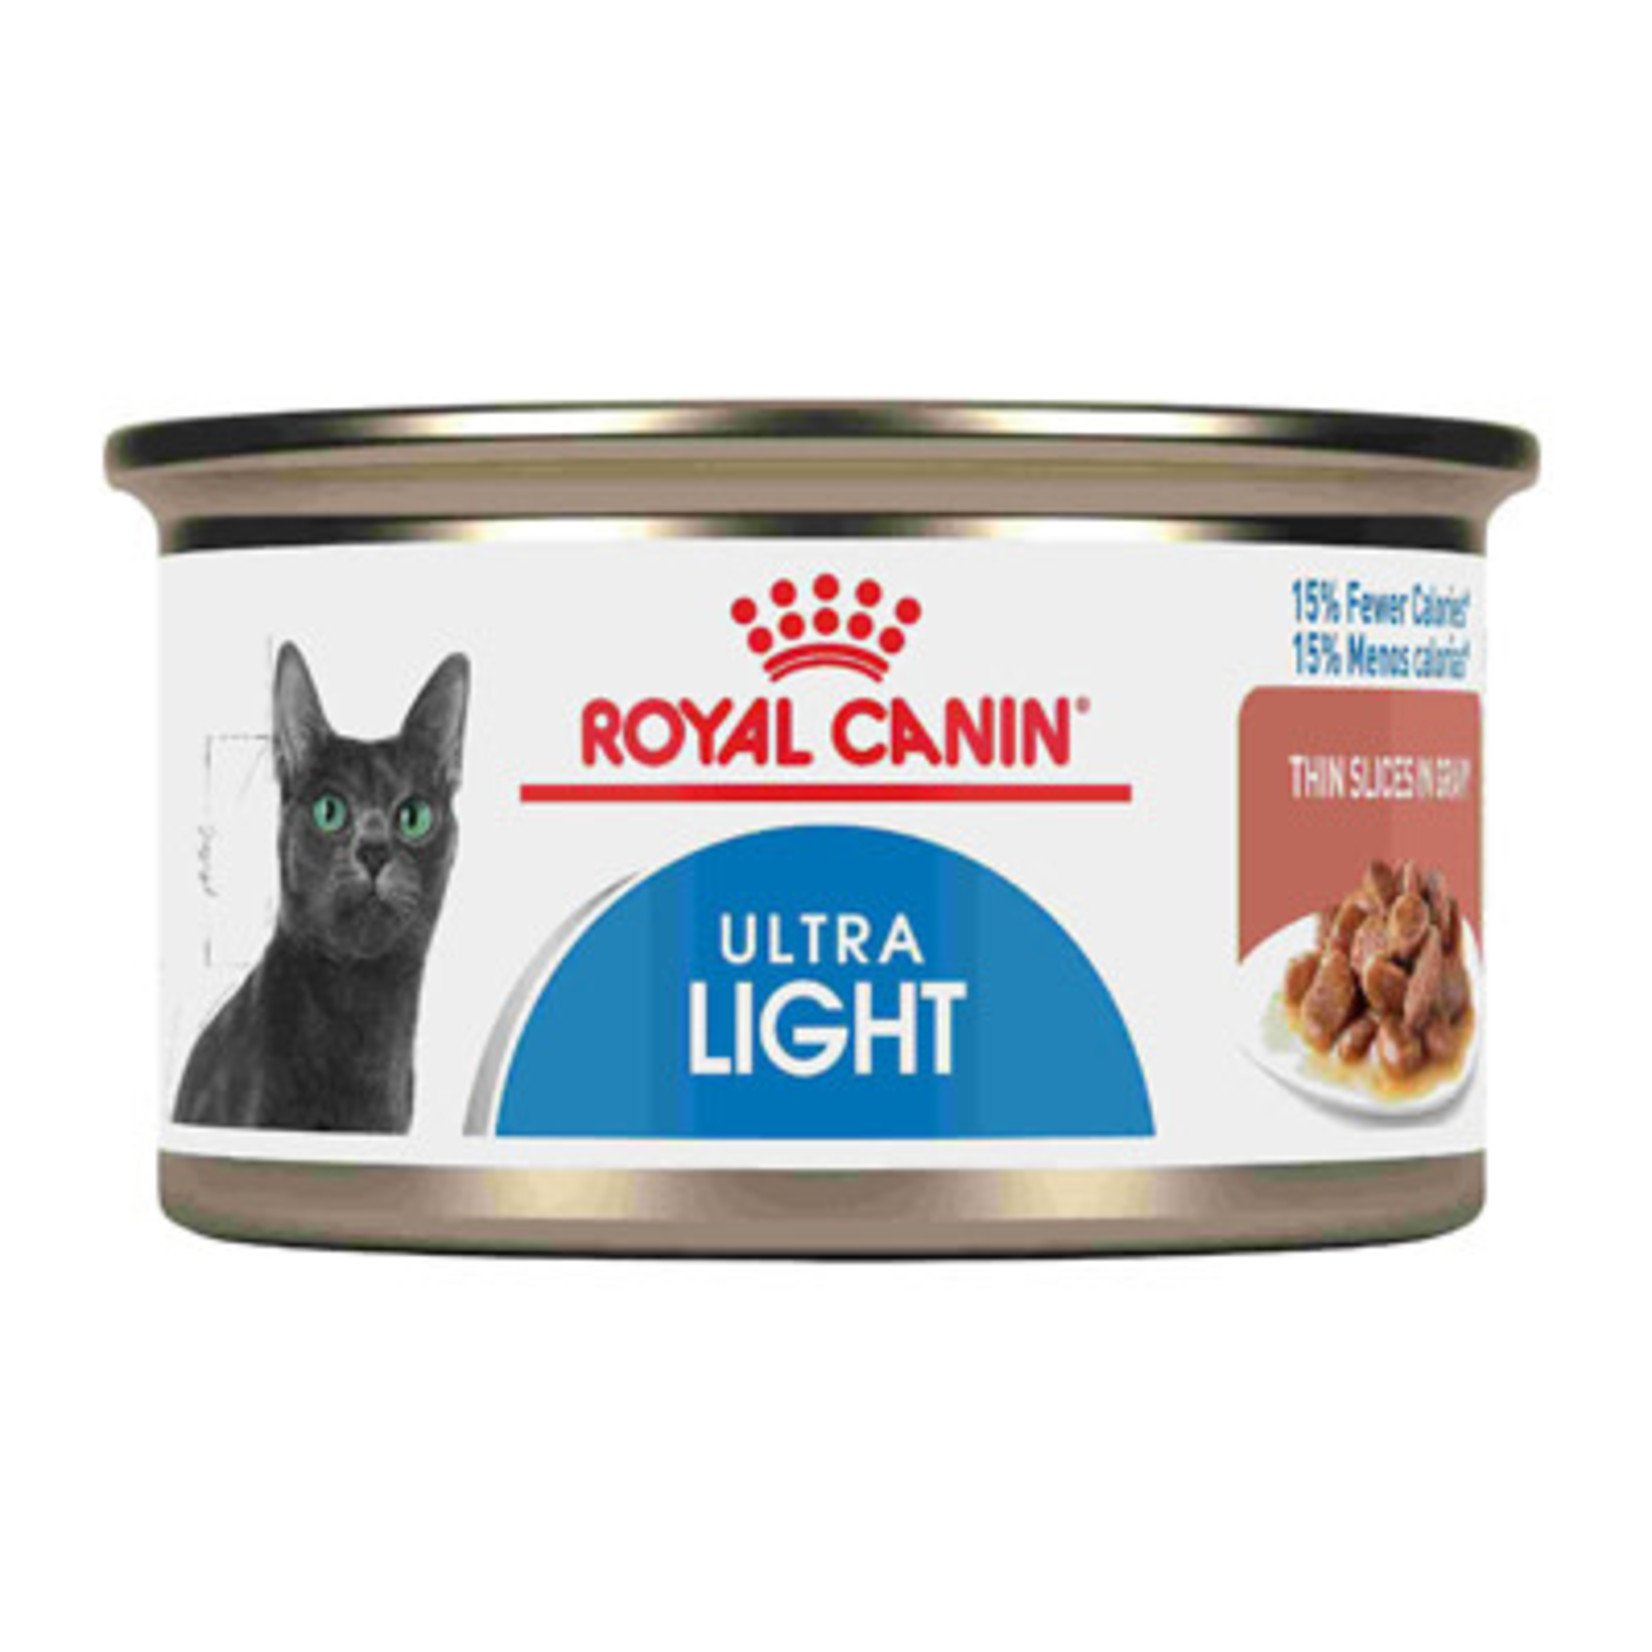 Royal Canin Ultra Lite Cat 3oz Royal Canin